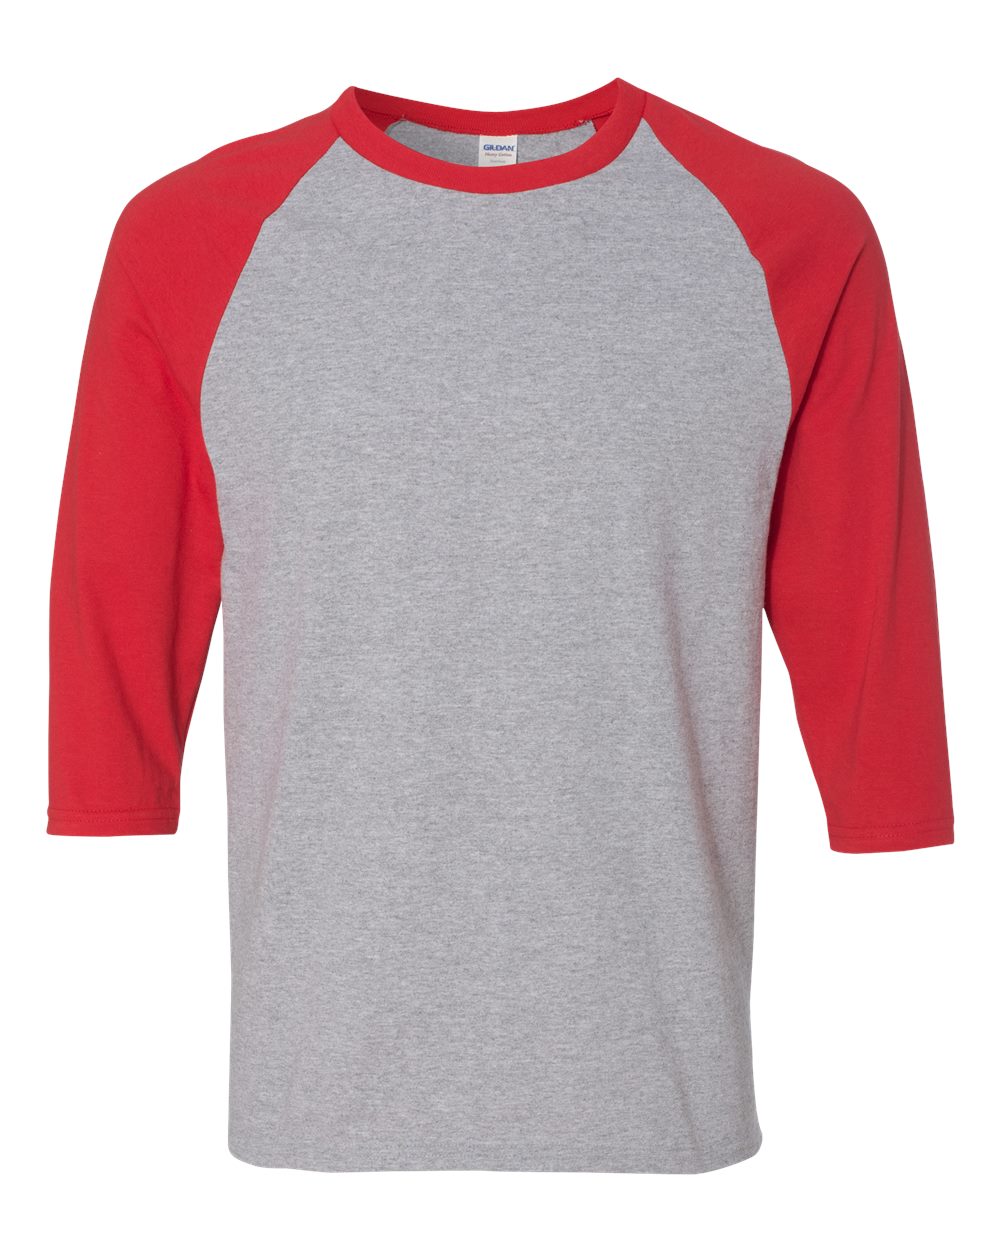 red and grey raglan shirt